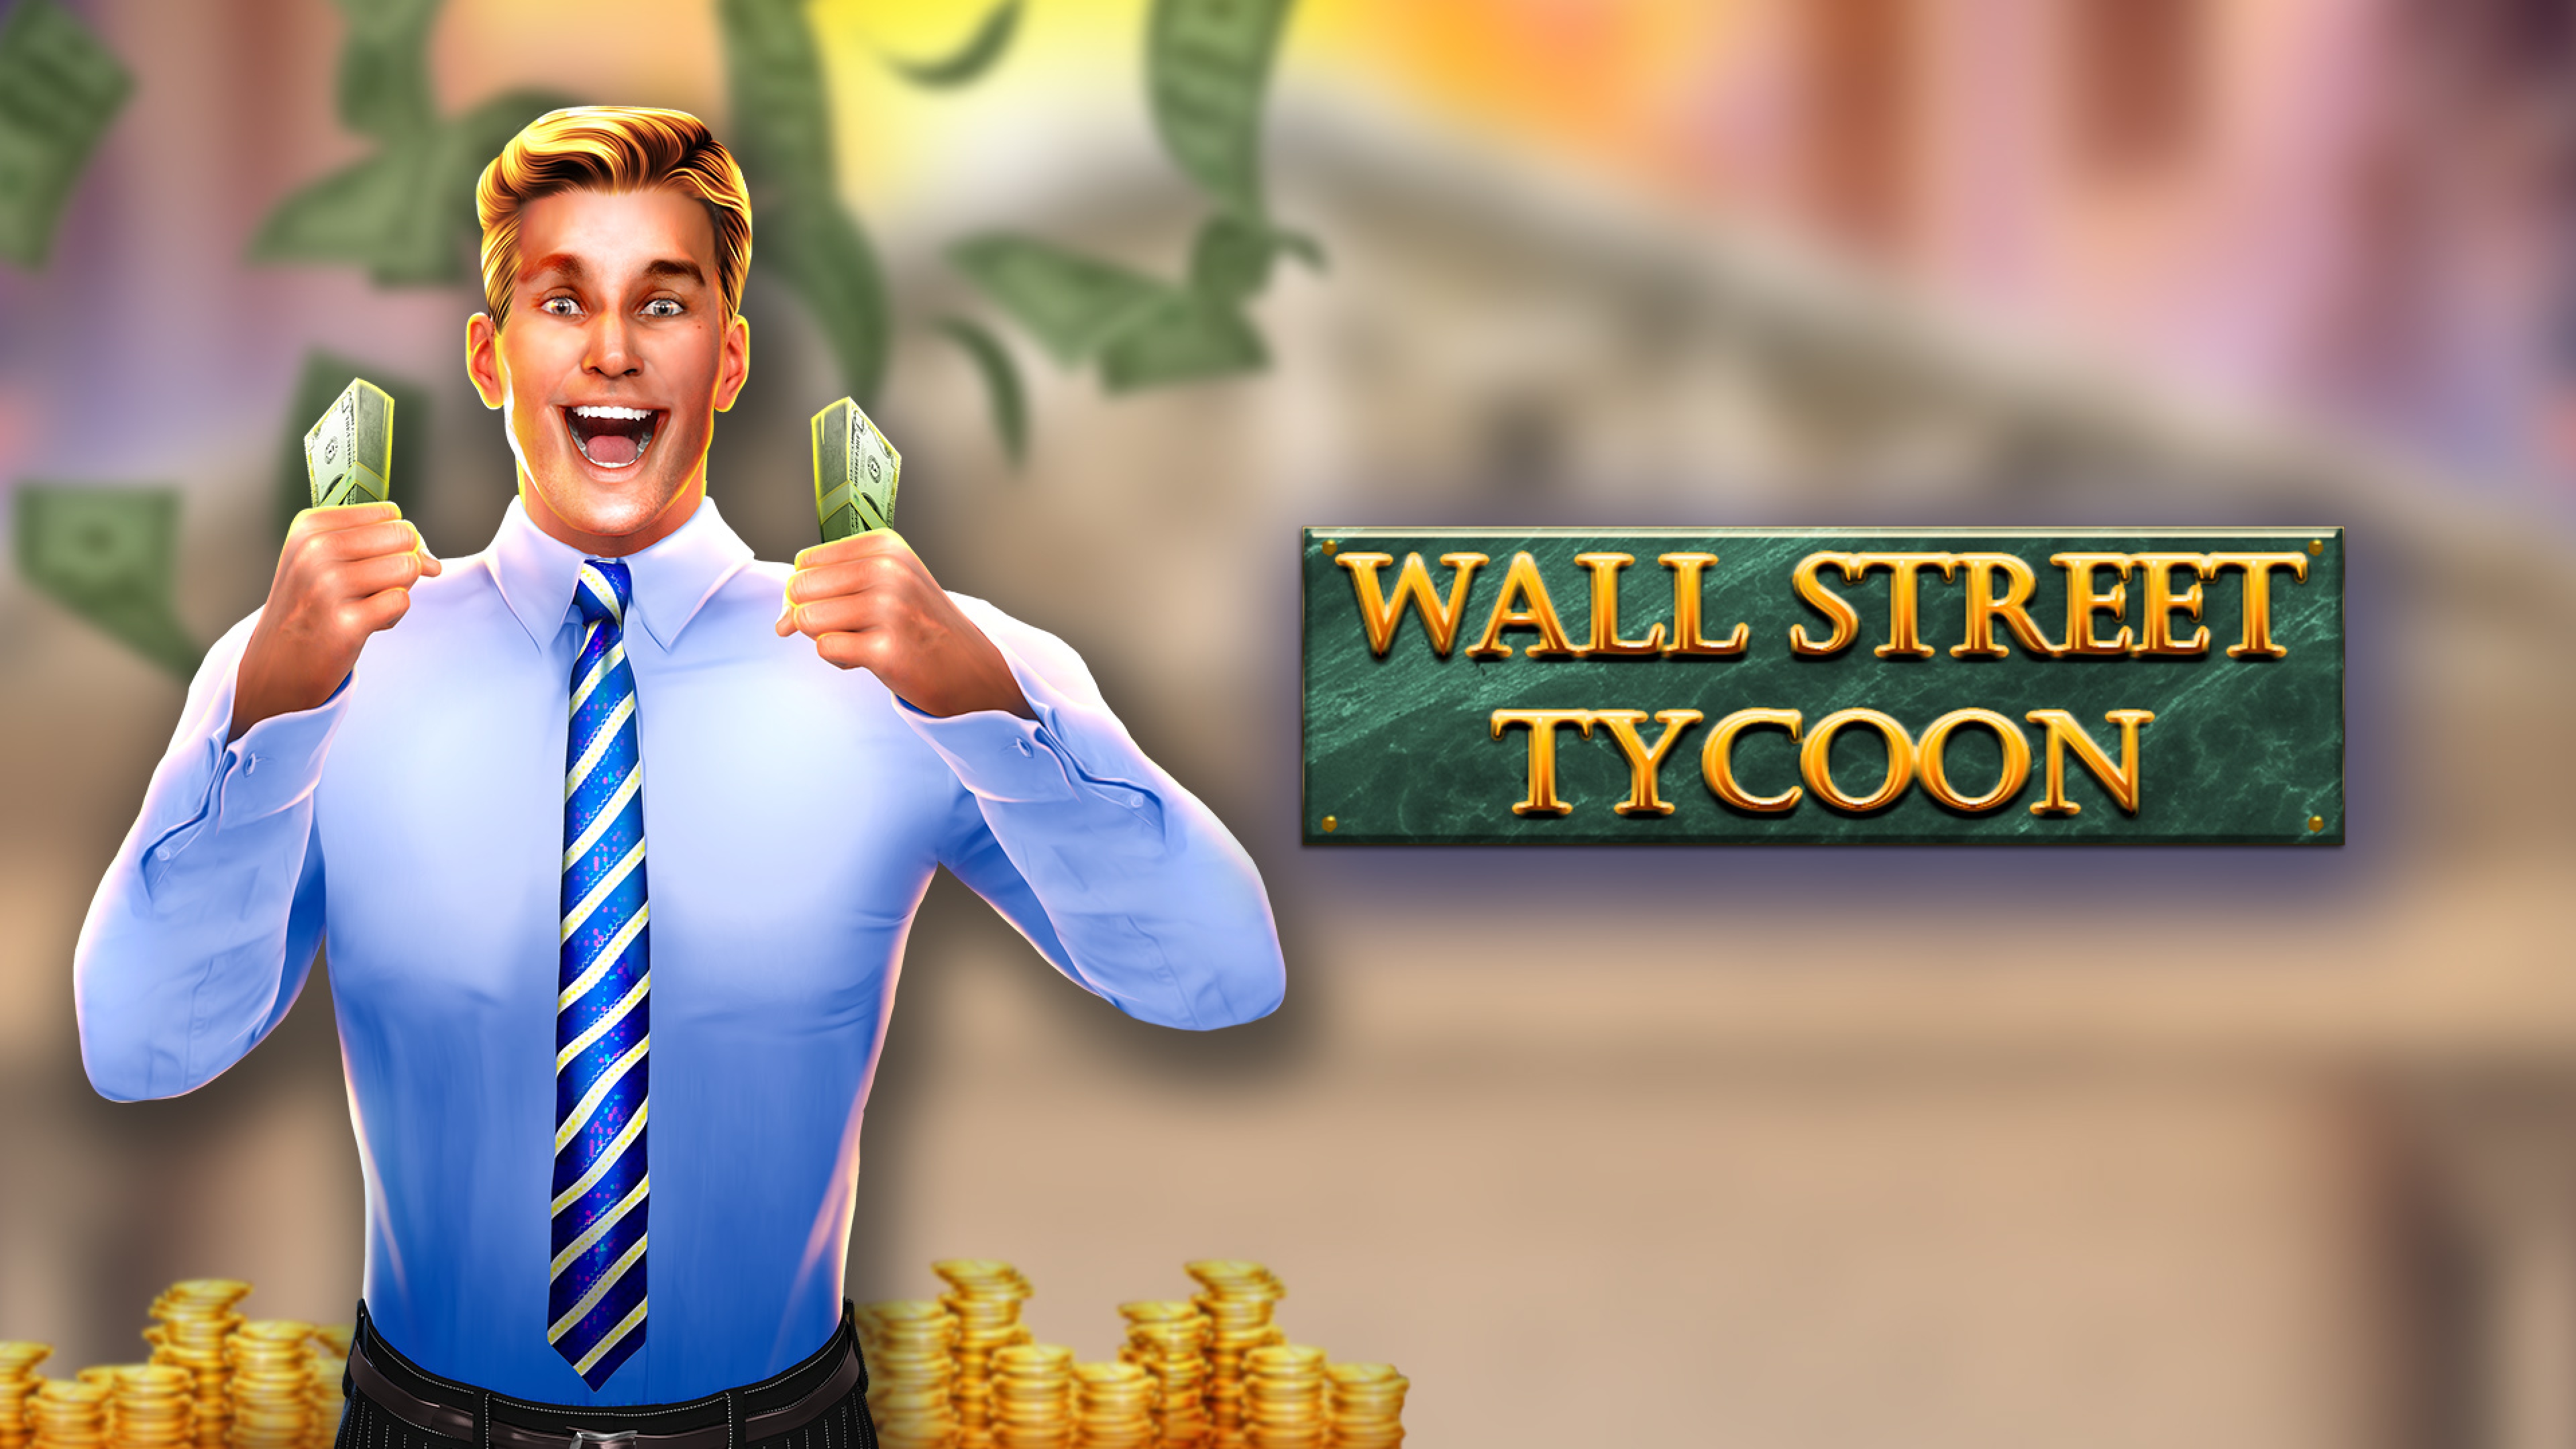 Wall Street Tycoon